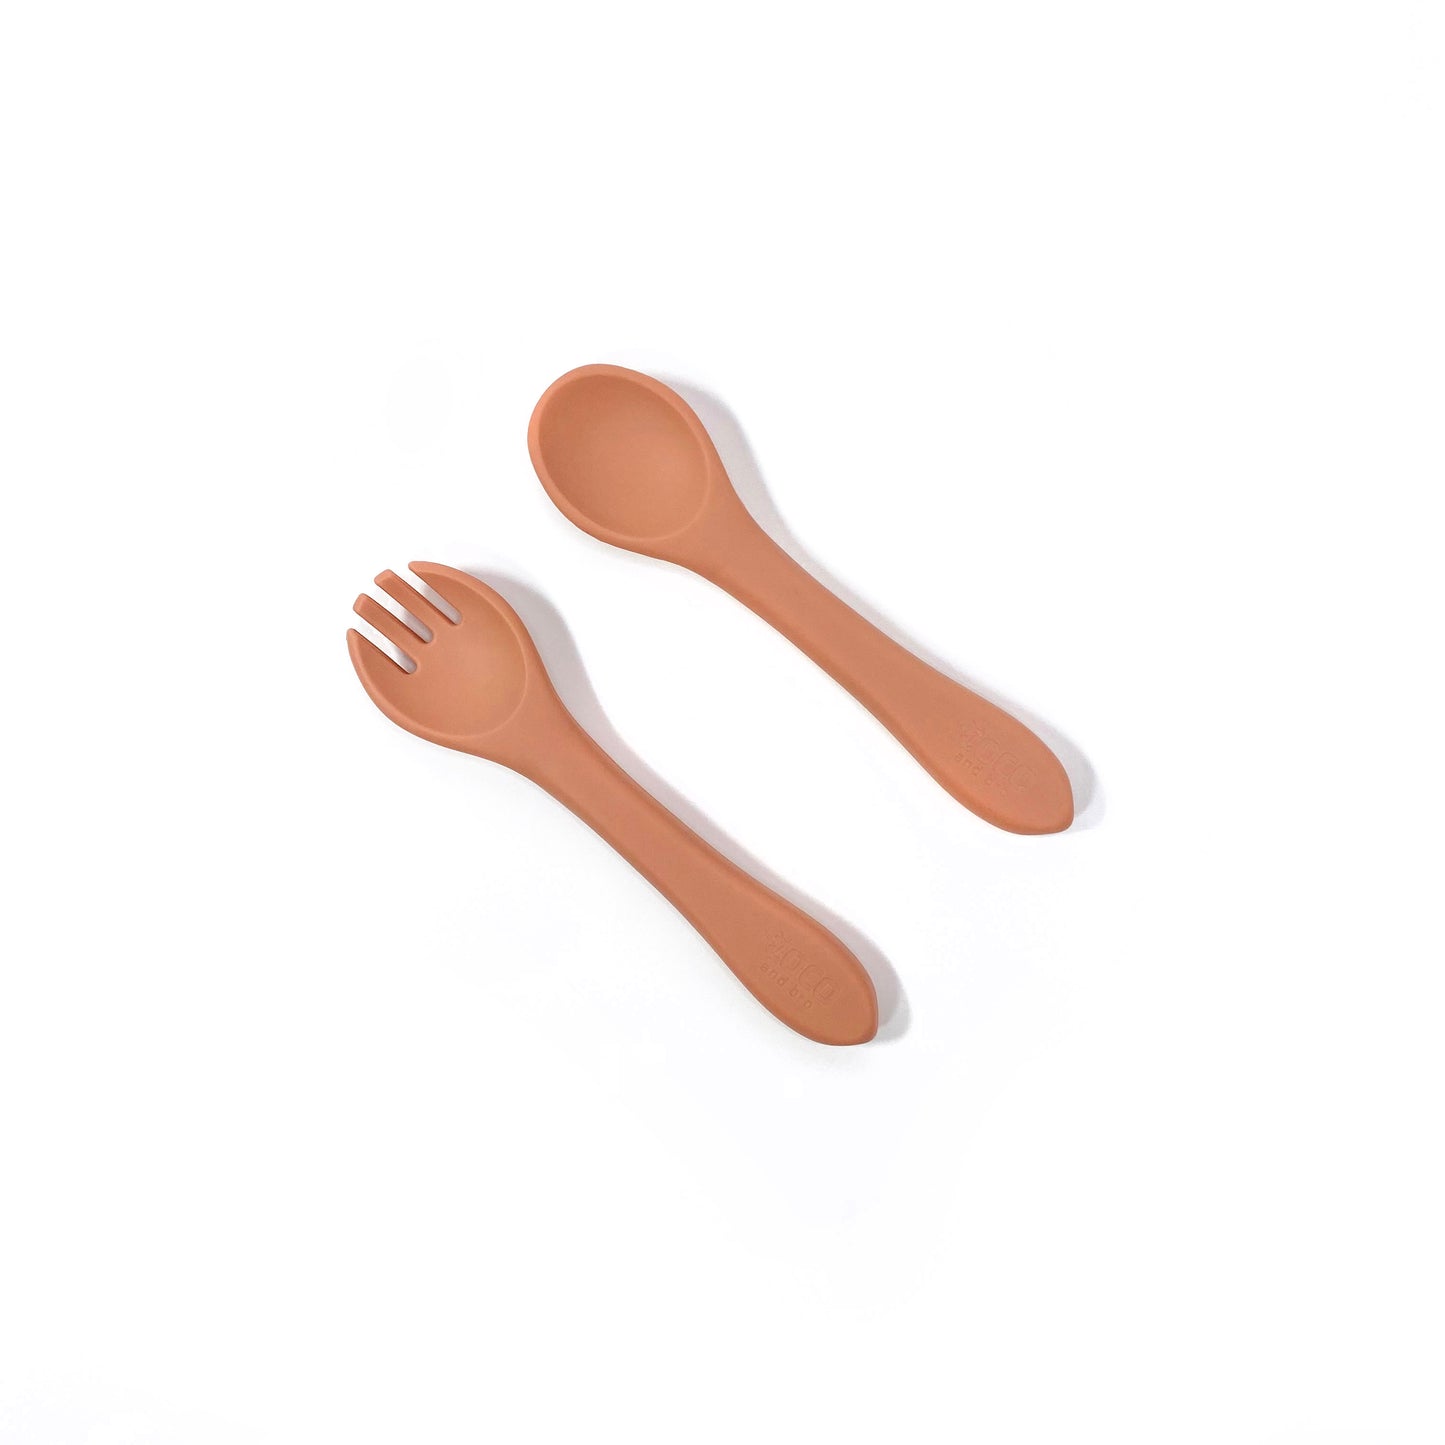 A set of sunset orange silicone children’s cutlery.